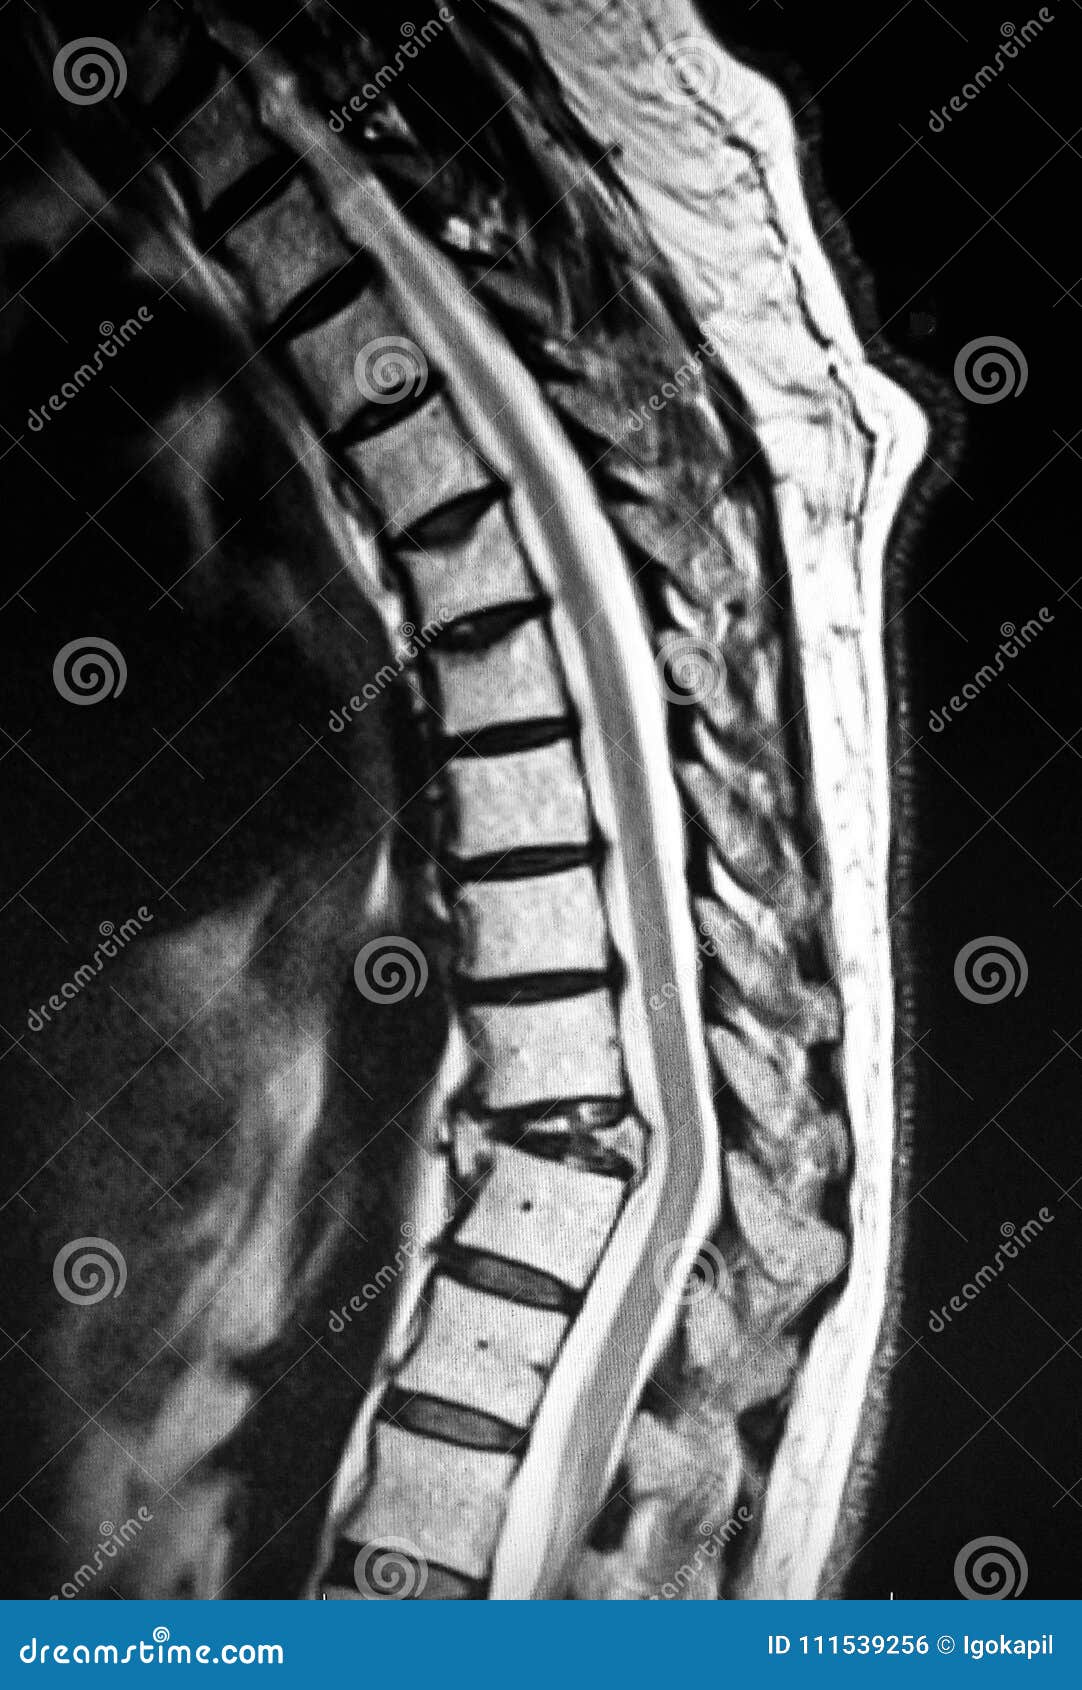 thoracic vertebrae pathological body compression mri